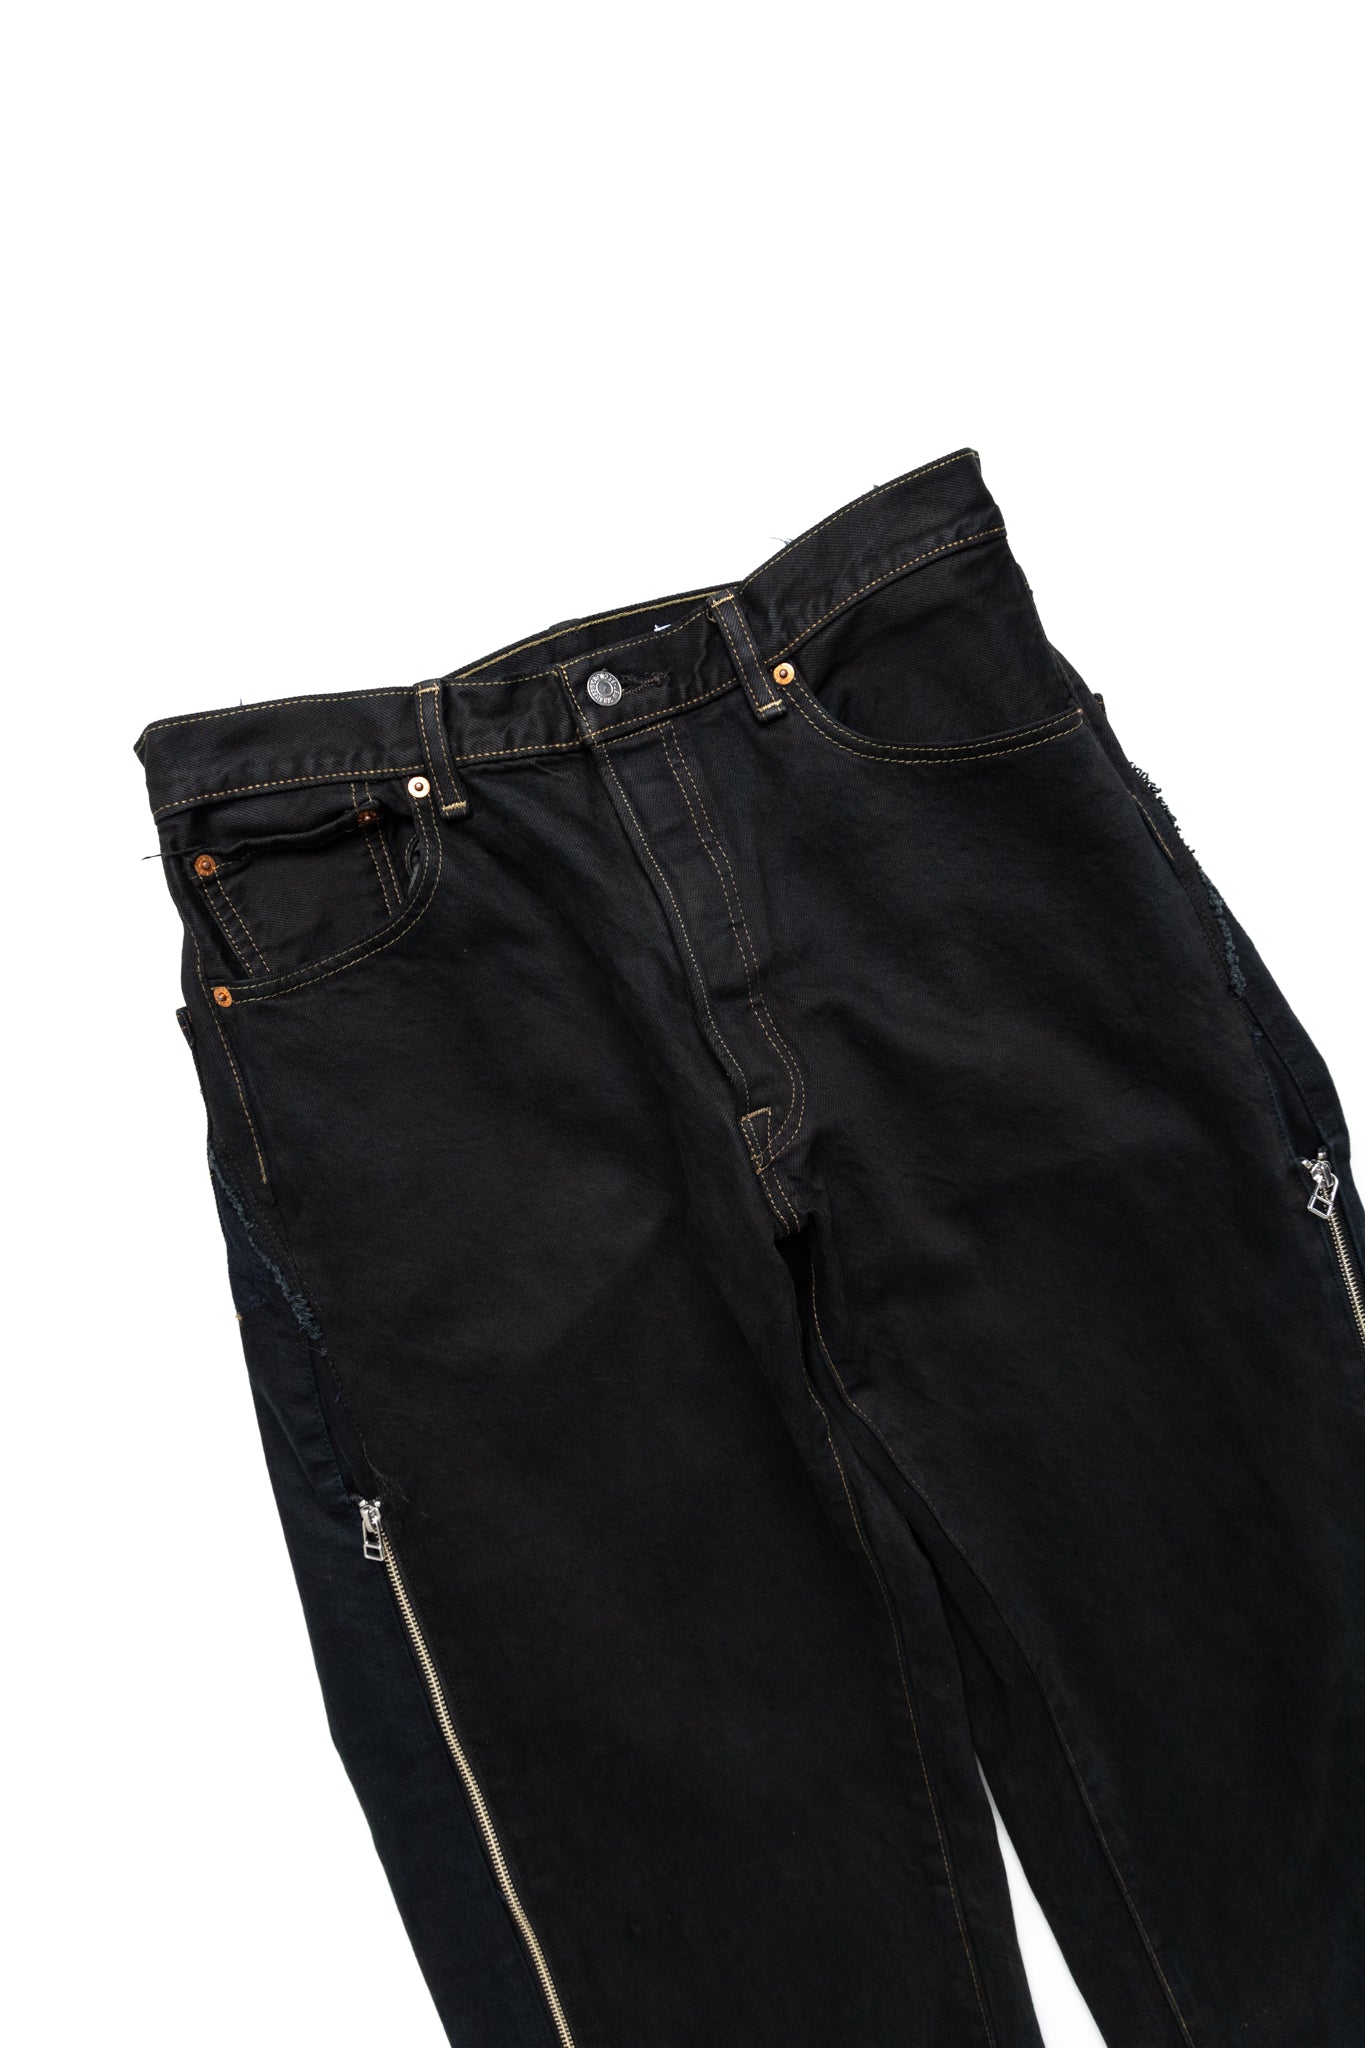 Zip Baggy Jeans Black - M (1)